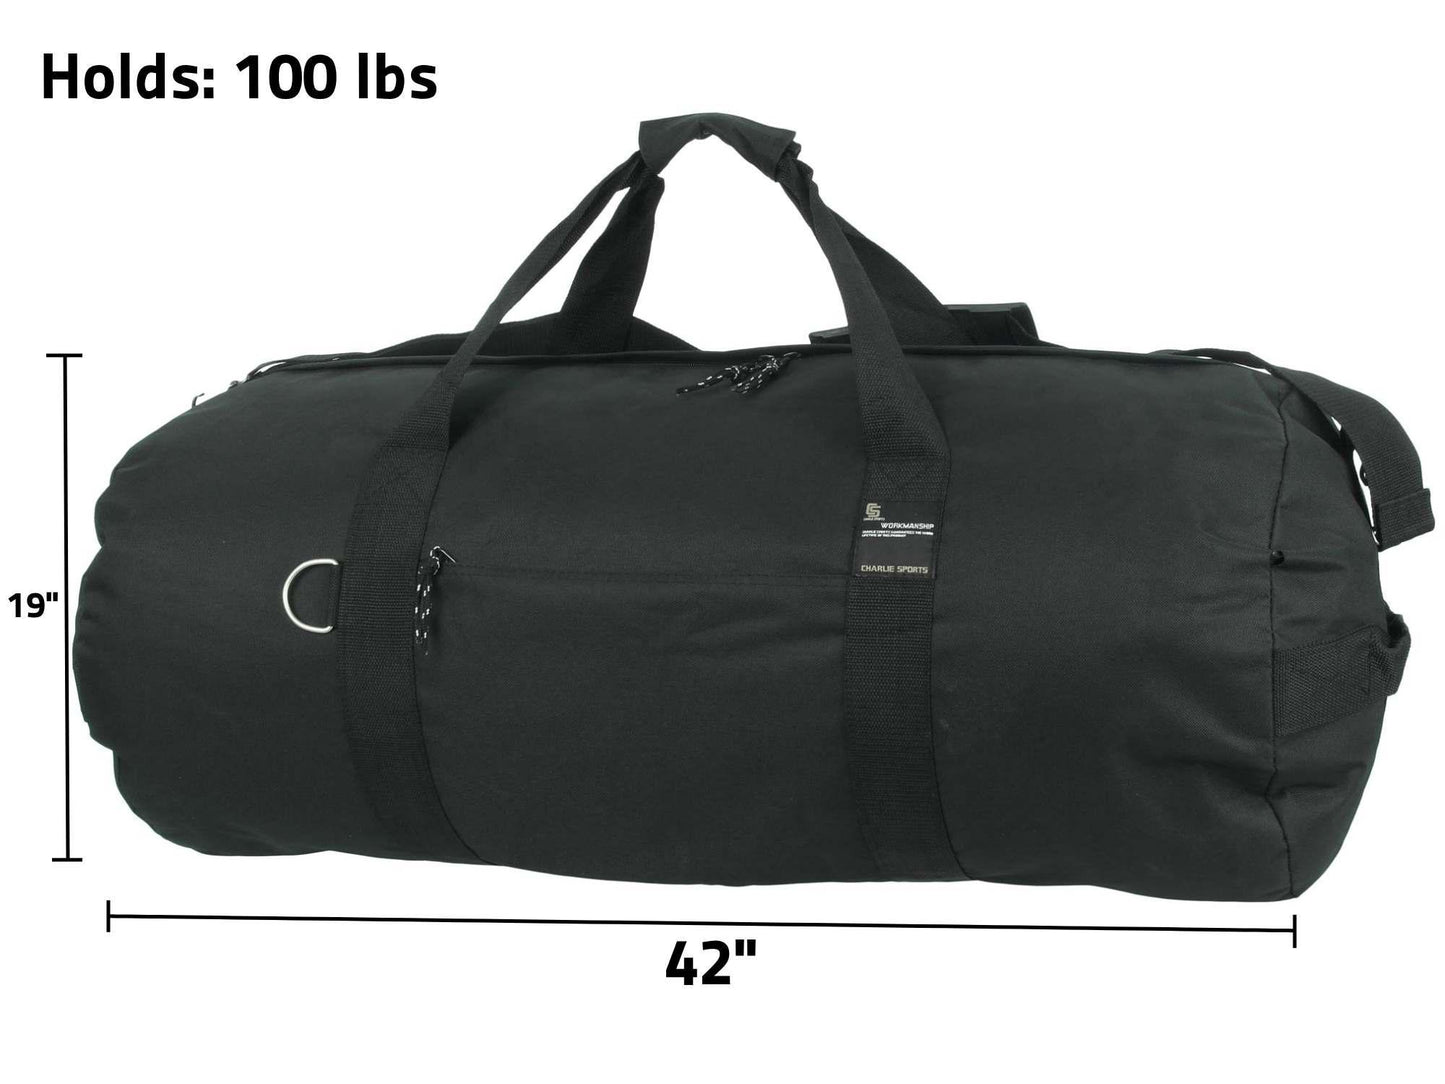 #5 - Round Duffel Bag (100lbs) (42")